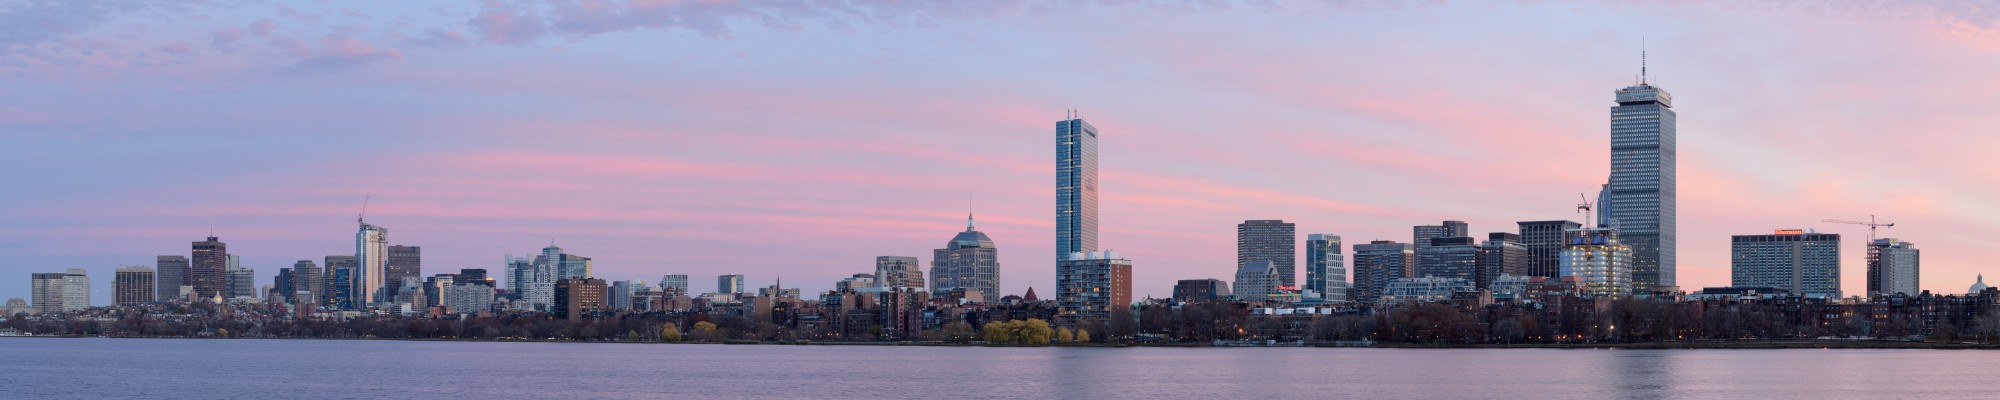 Boston skyline from Cambridge November 2015 panorama 1